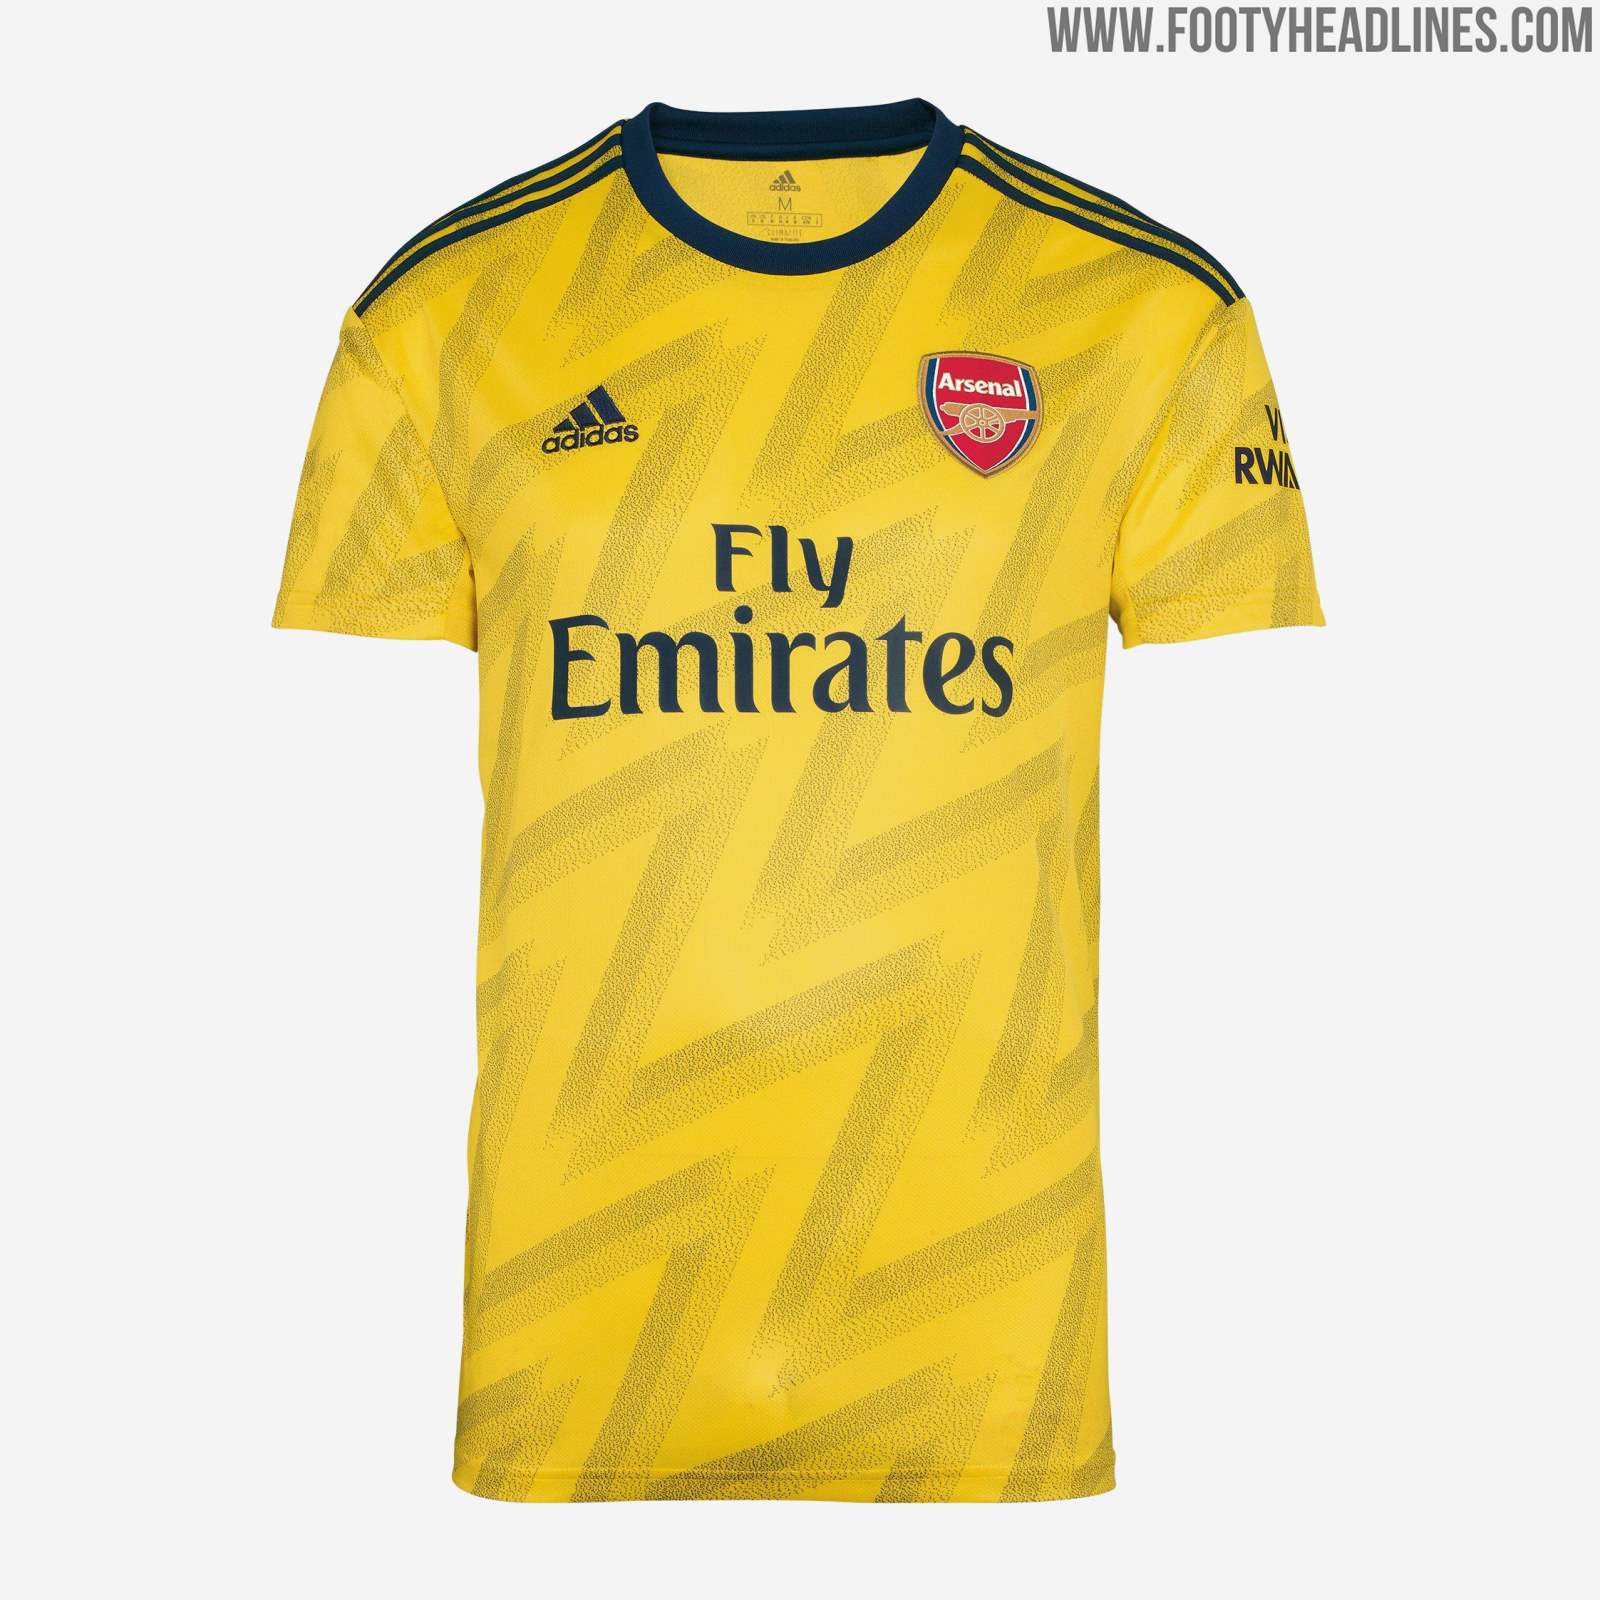 Best Set Of The Season? Adidas Arsenal 19-20 Home, Away & Third Kits